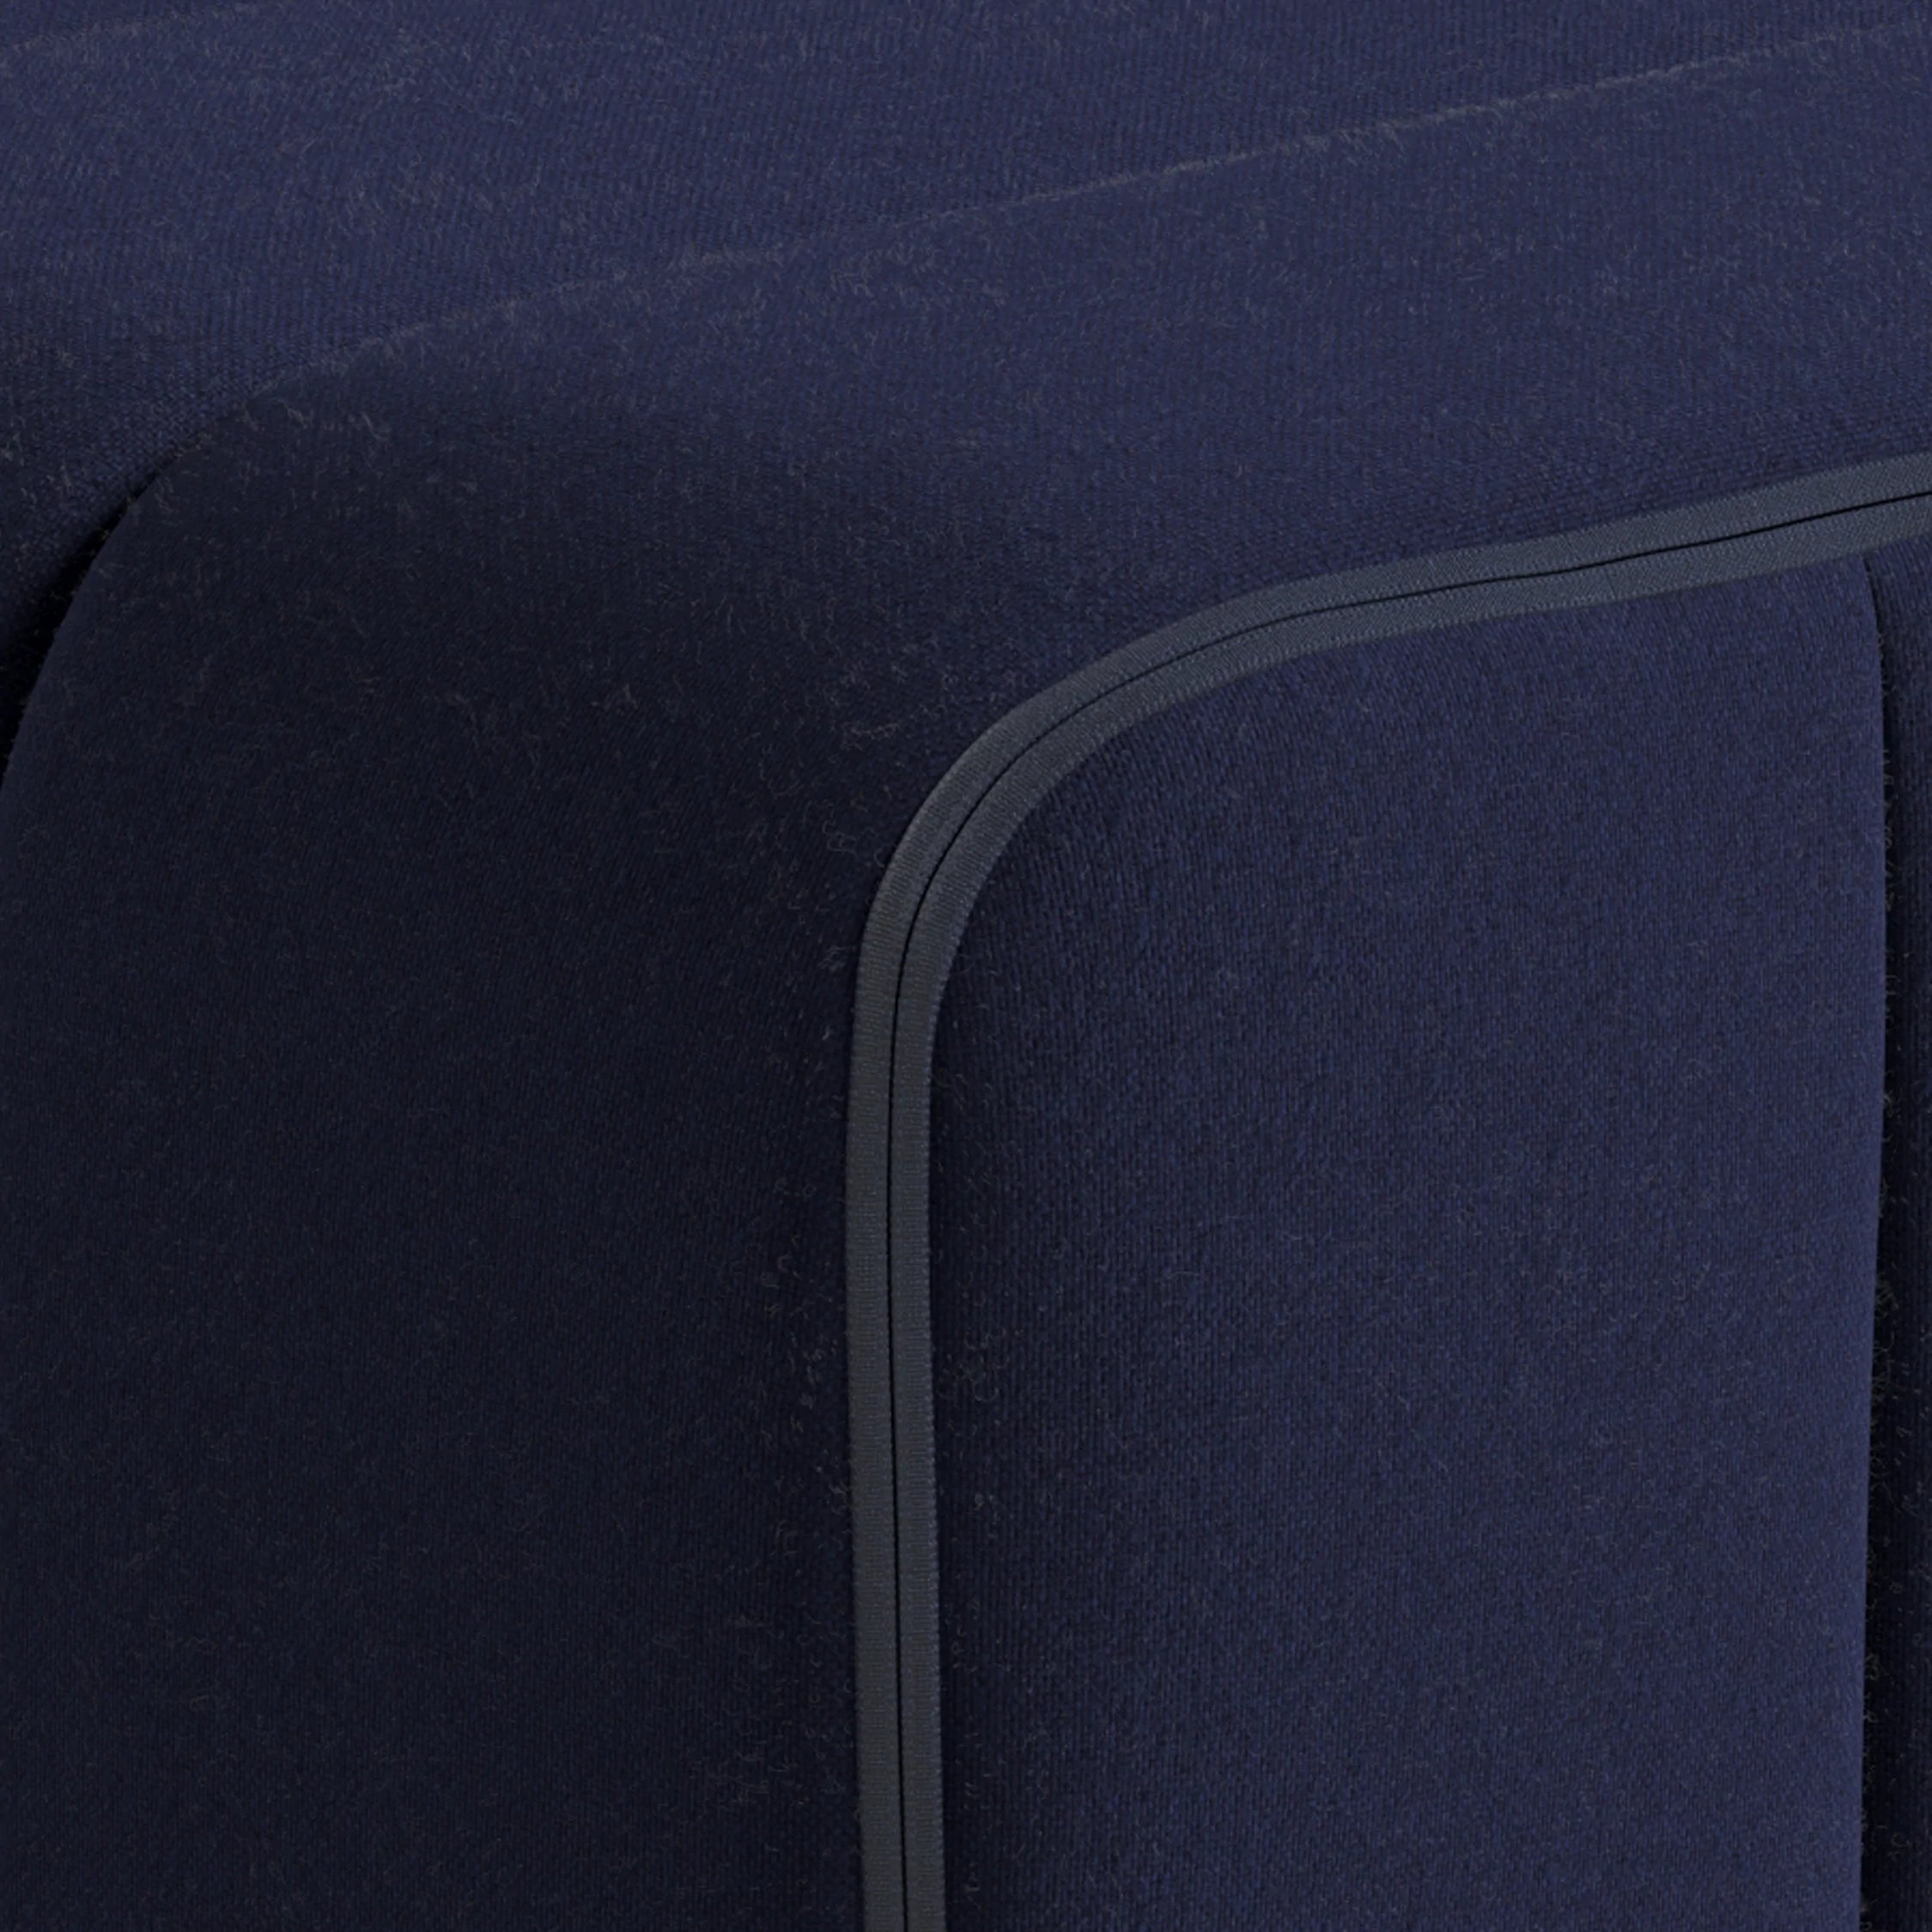 Modular sofa system Curt - Jet dark blue Sofas by Ambivalenz